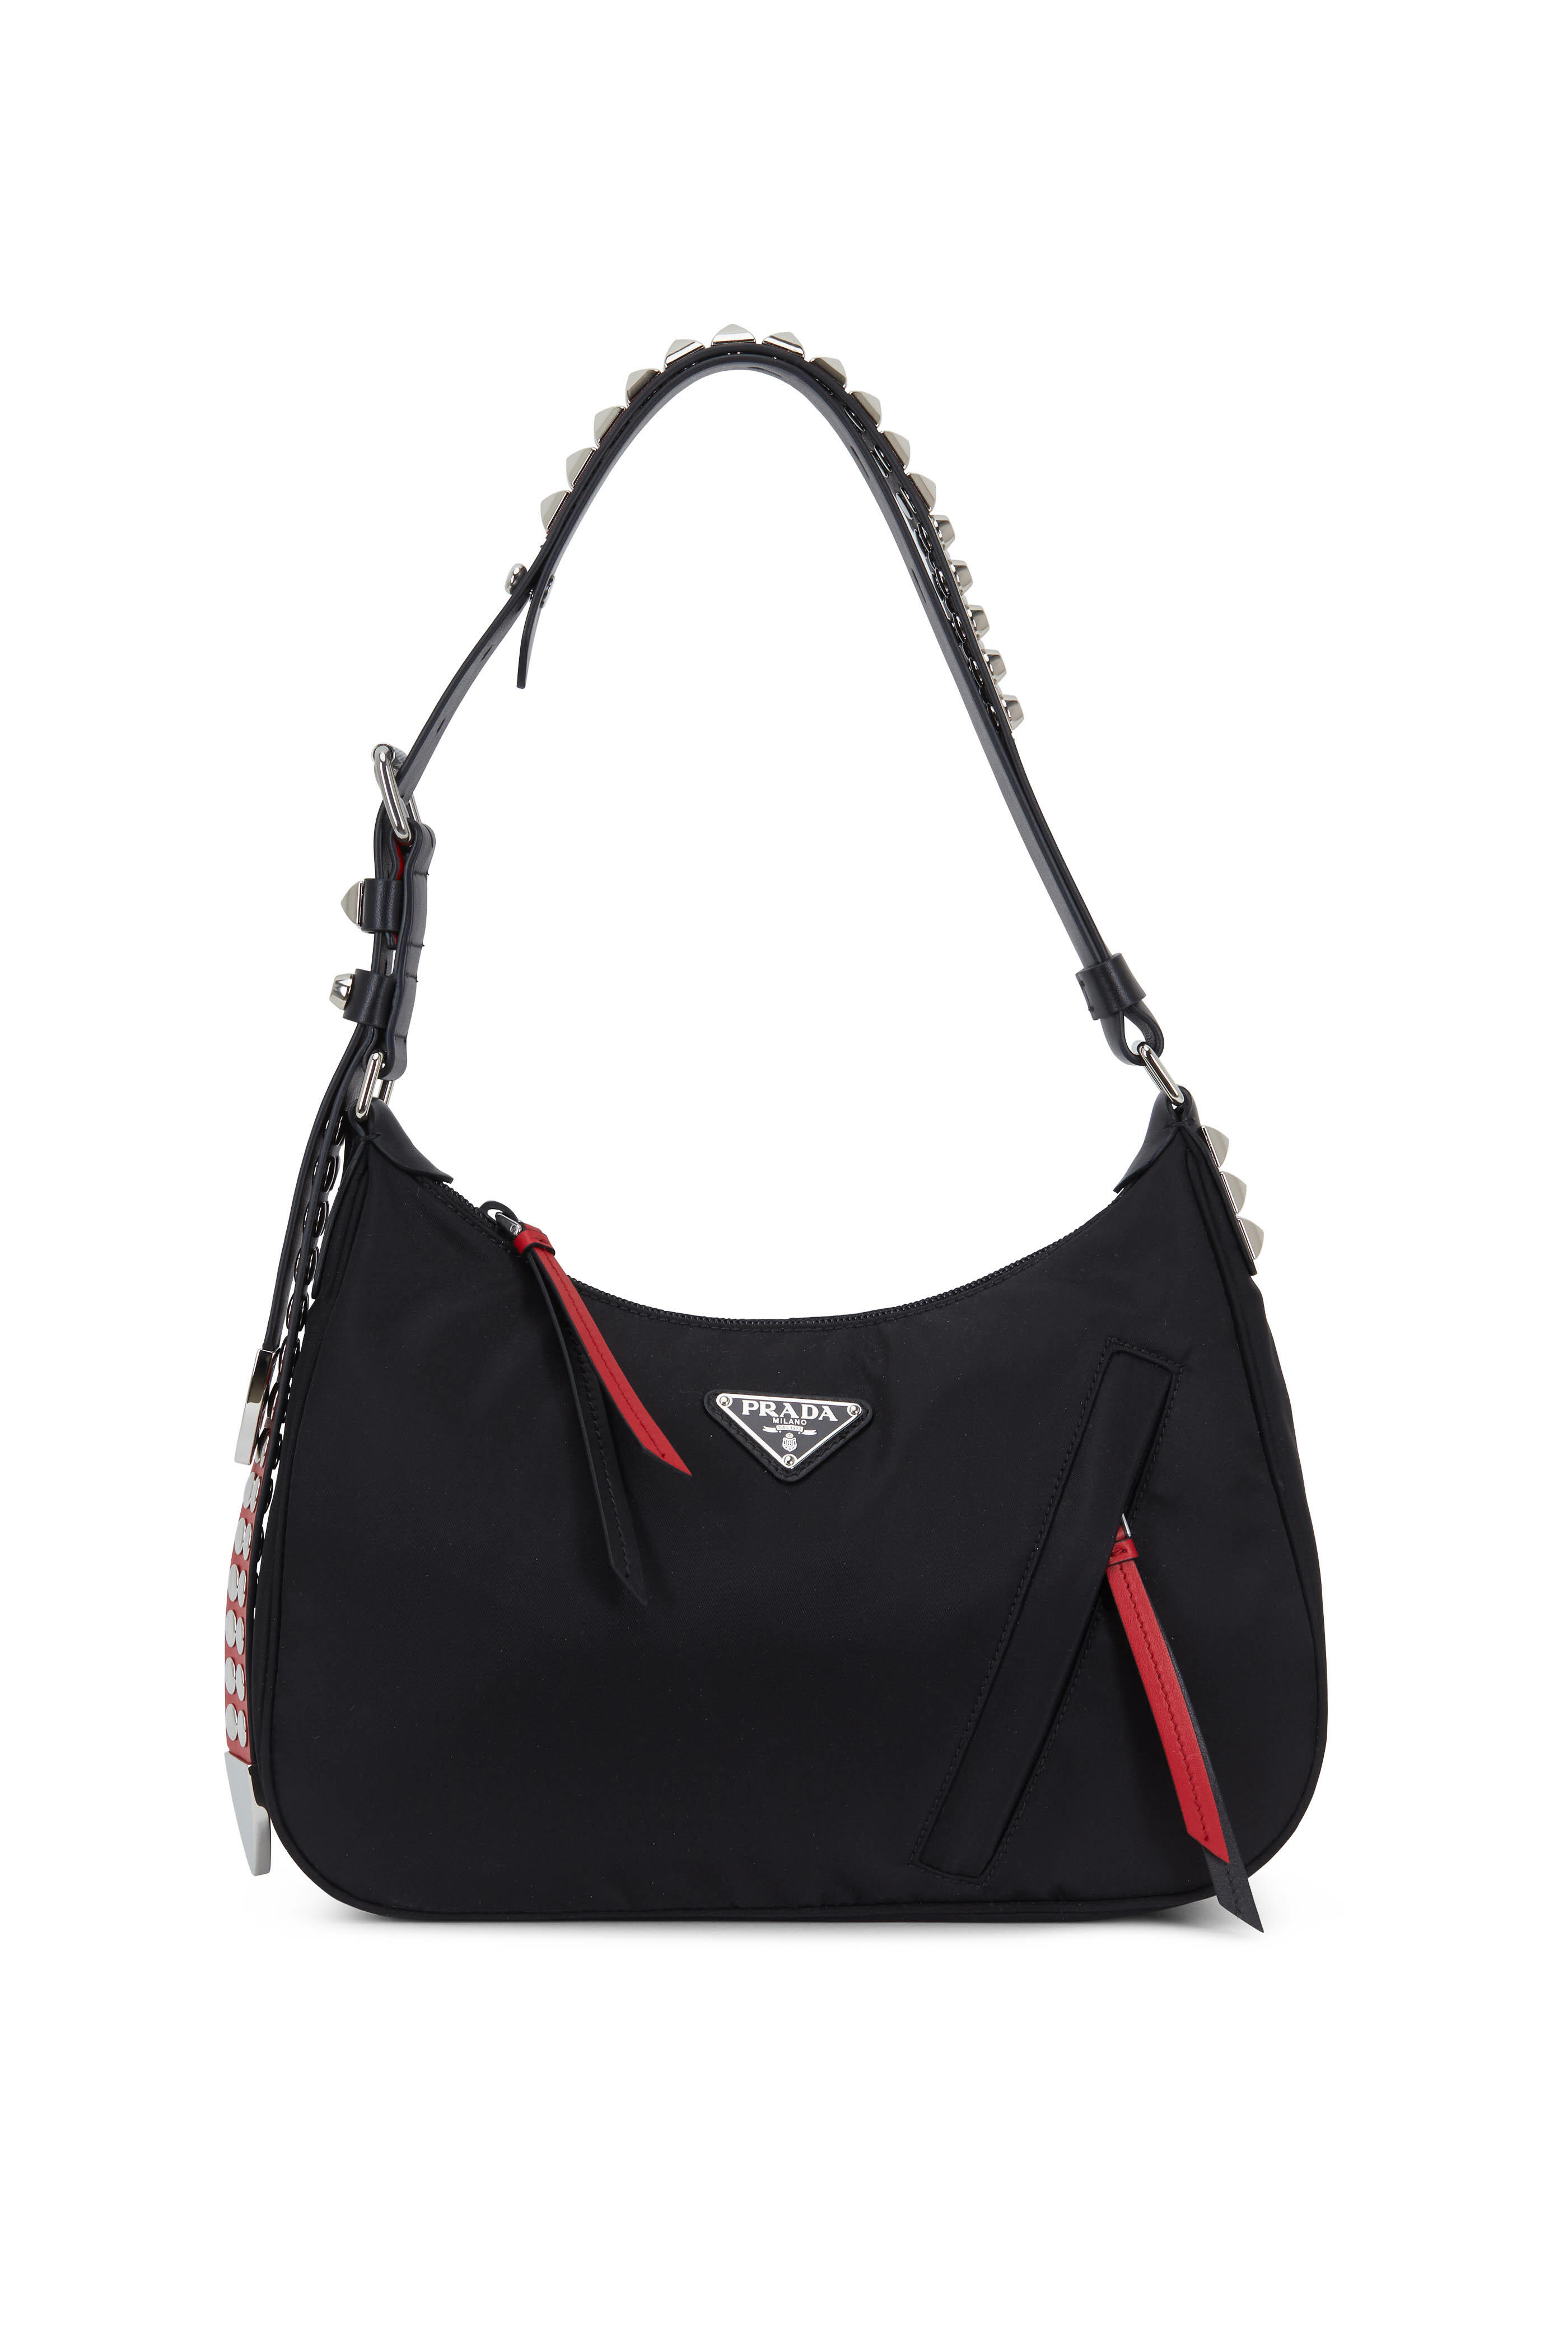 Prada Men's Saffiano Leather Multi-strap Crossbody Bag In Black